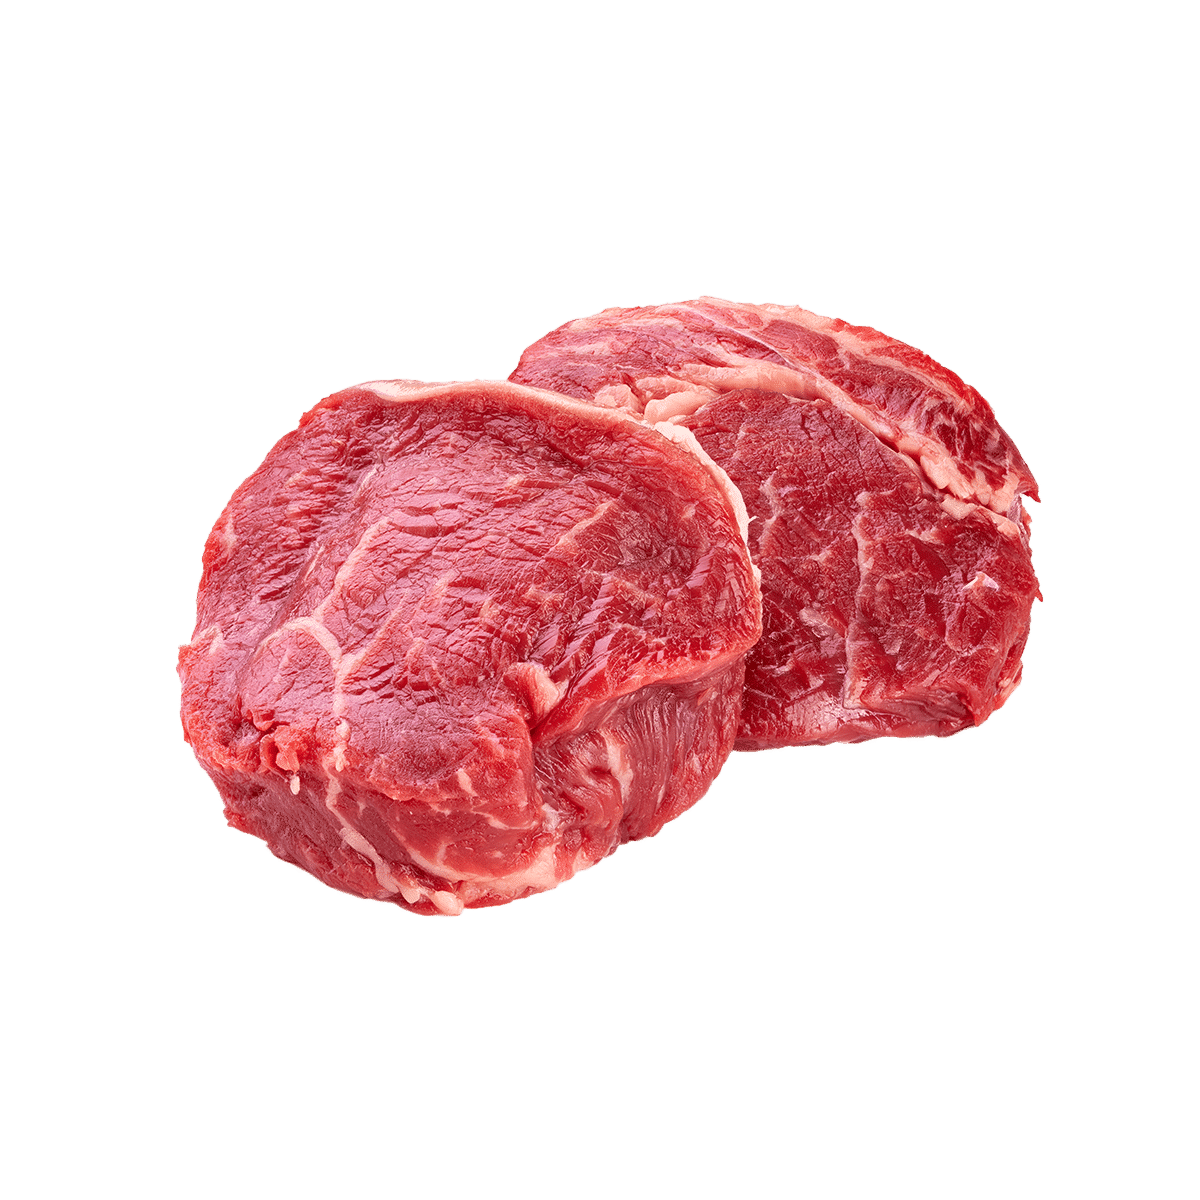 Two 8 oz beef tenderloin, house line